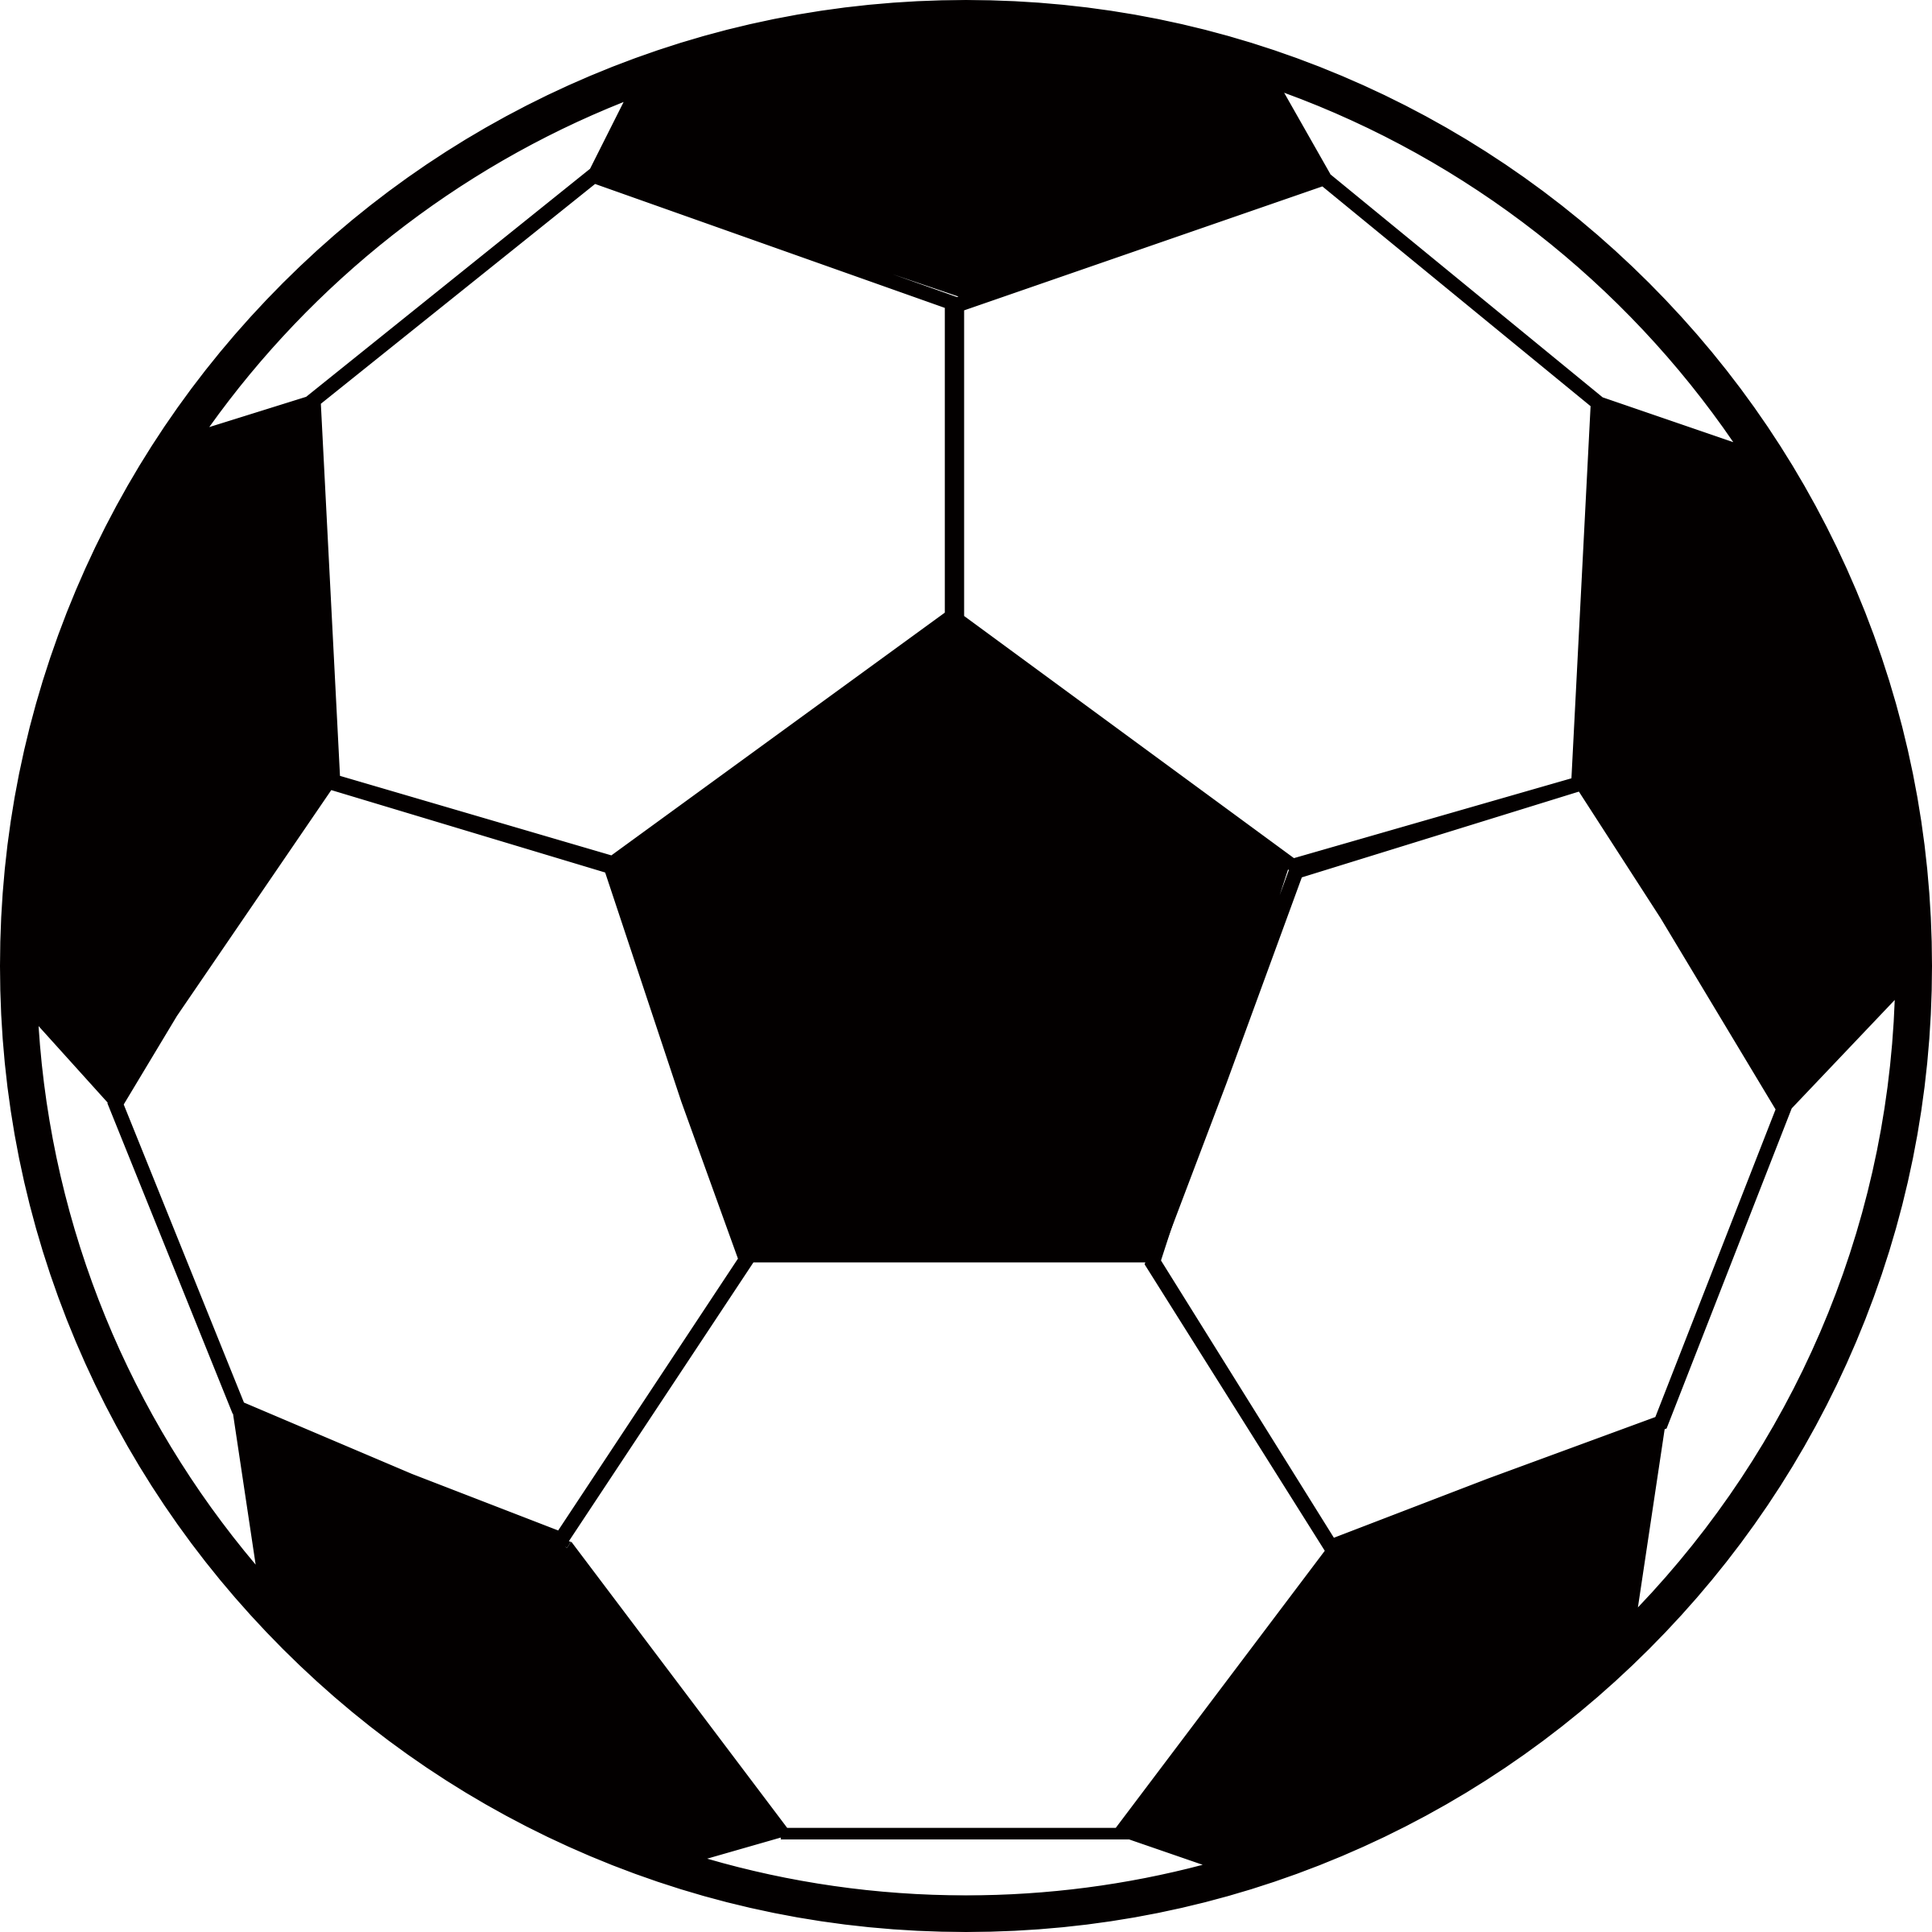 Related Clipart Of Soccer Ball - Soccer Ball Clip Art (2400x2400)